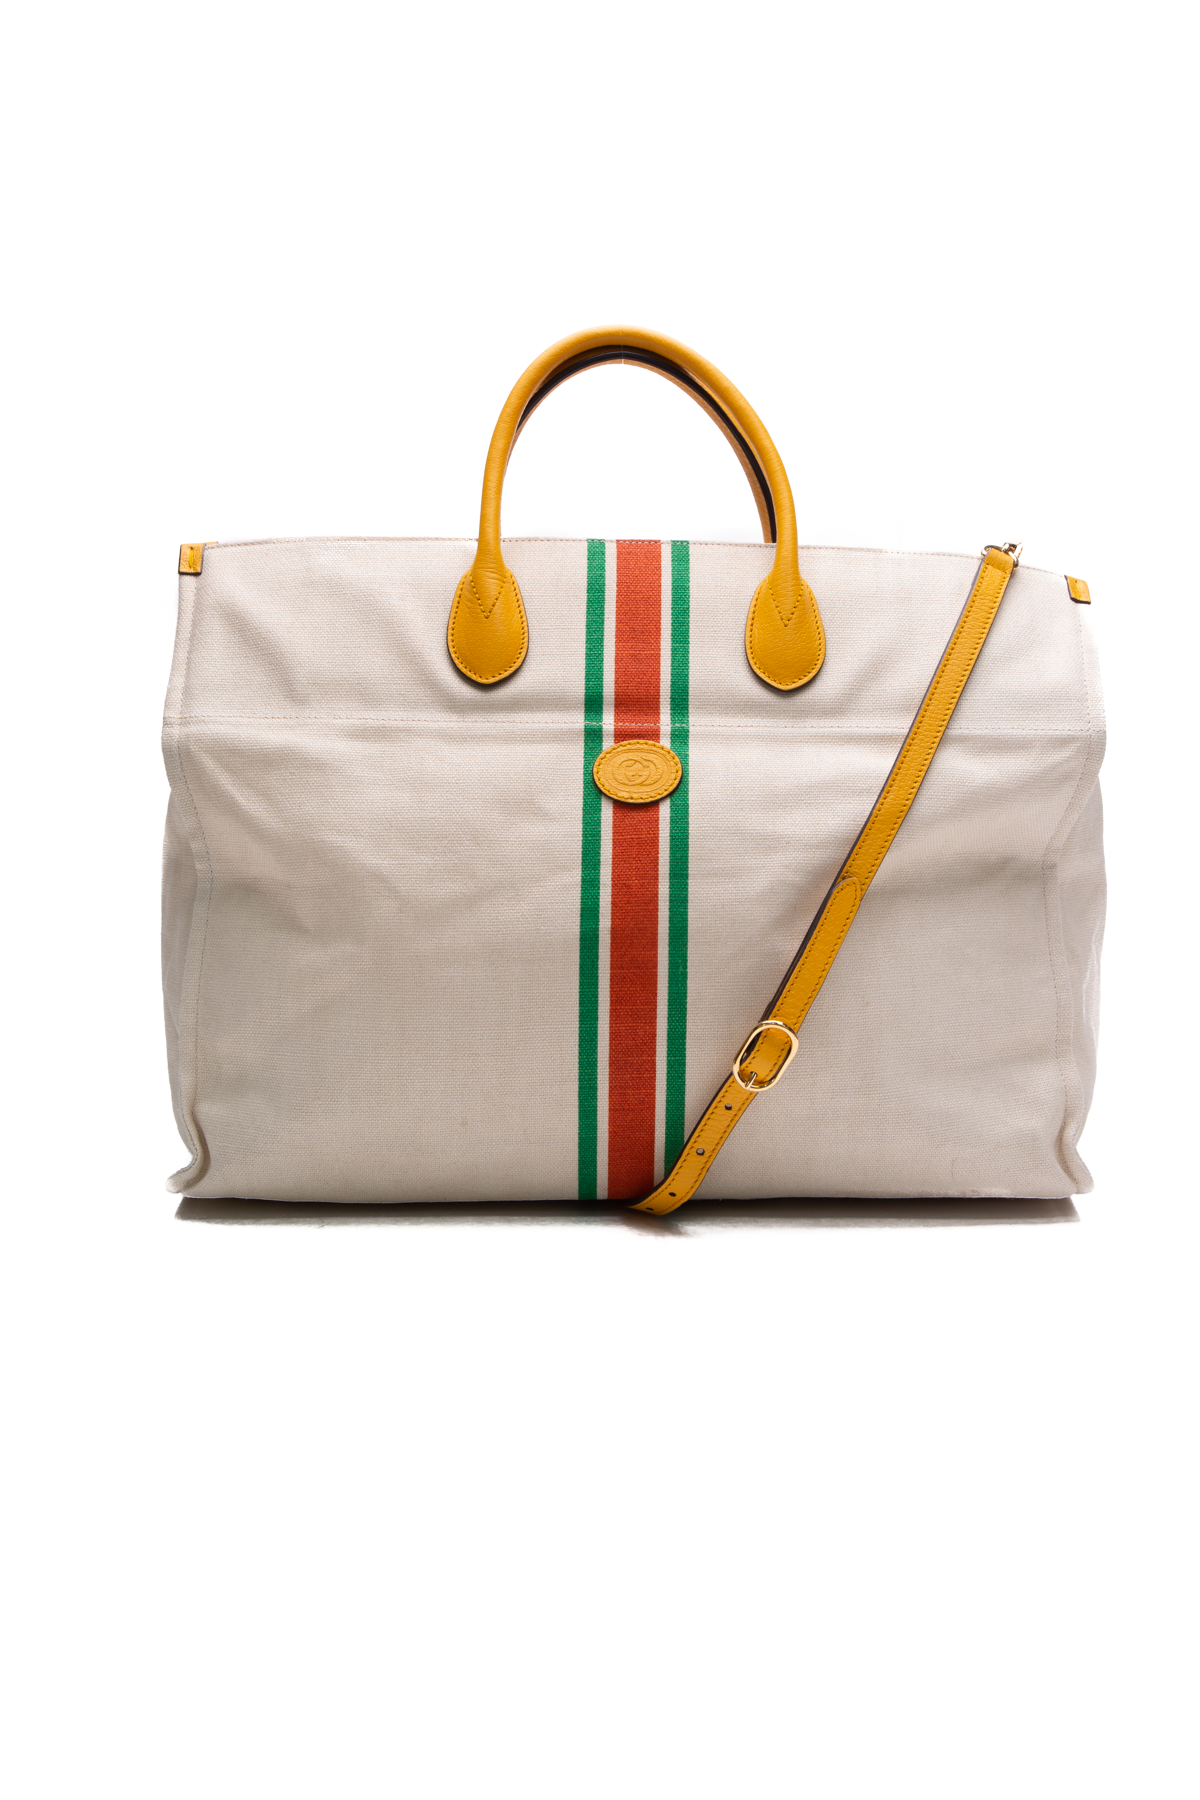 Gucci Rajah Large Canvas Tote Bag